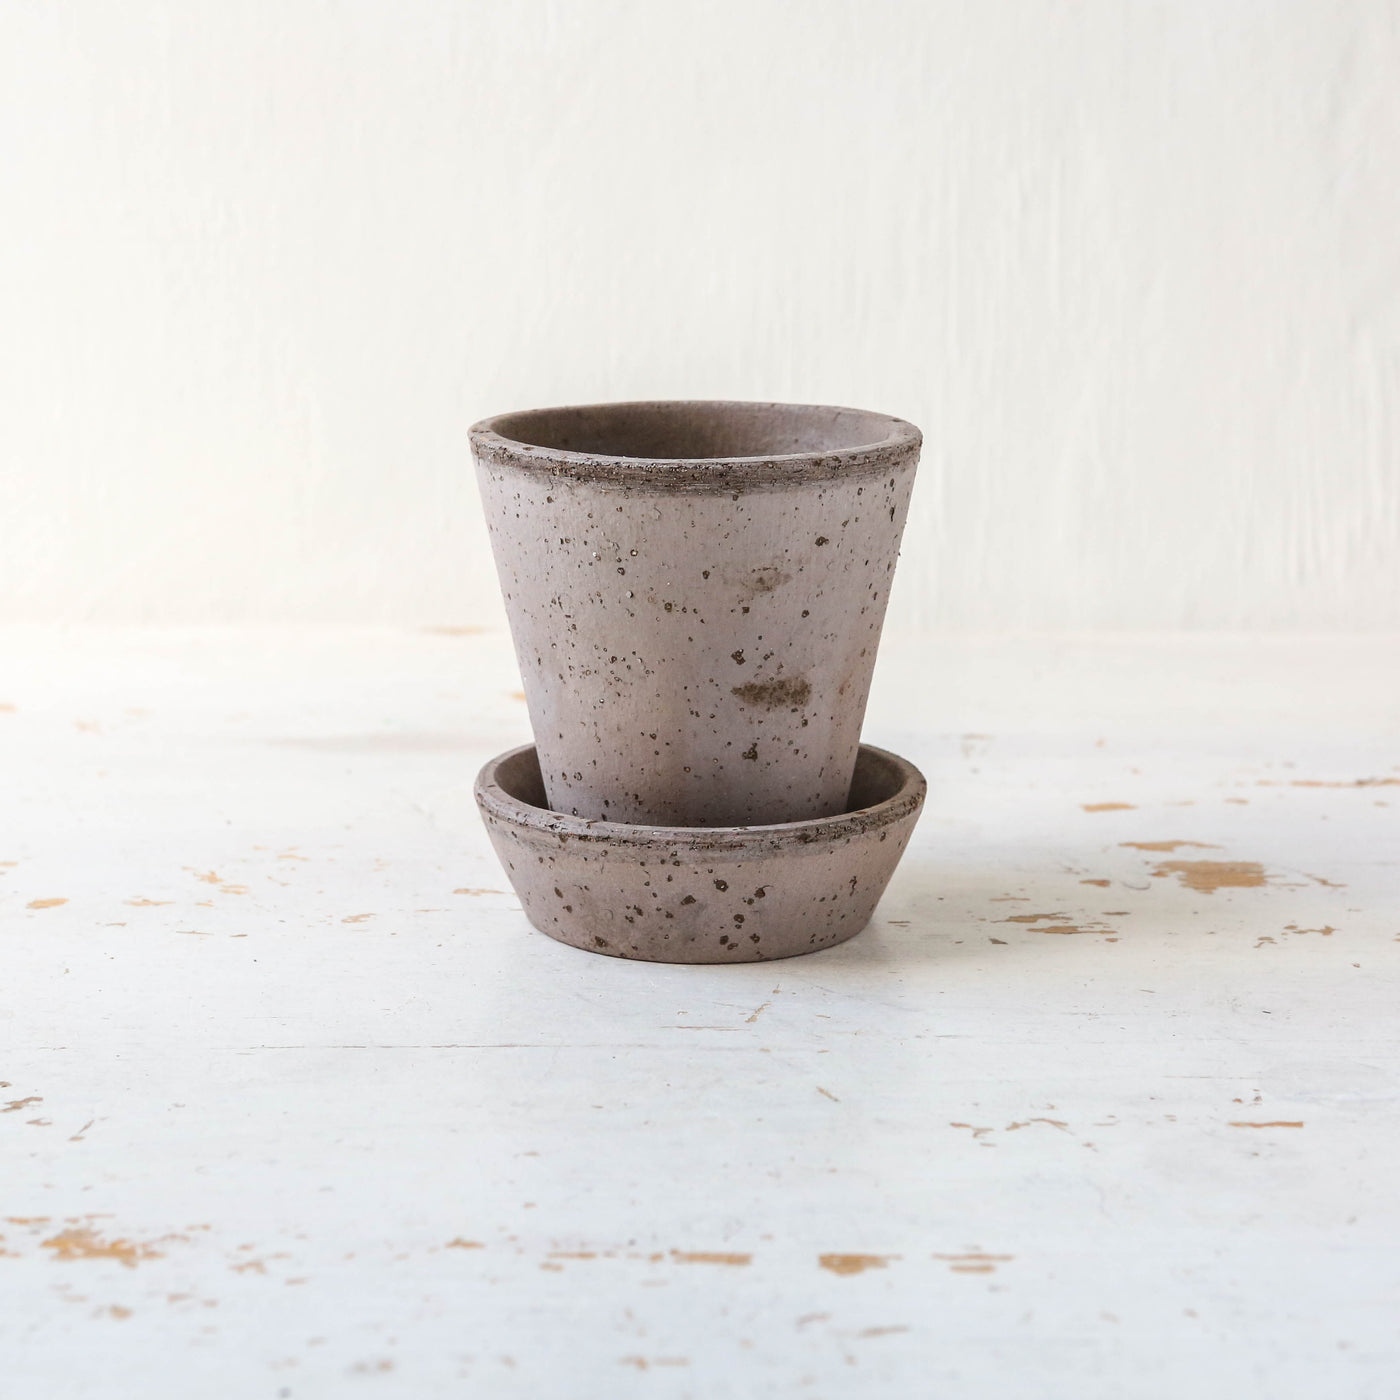 8cm Julie Plant Pot & Saucer - Grey